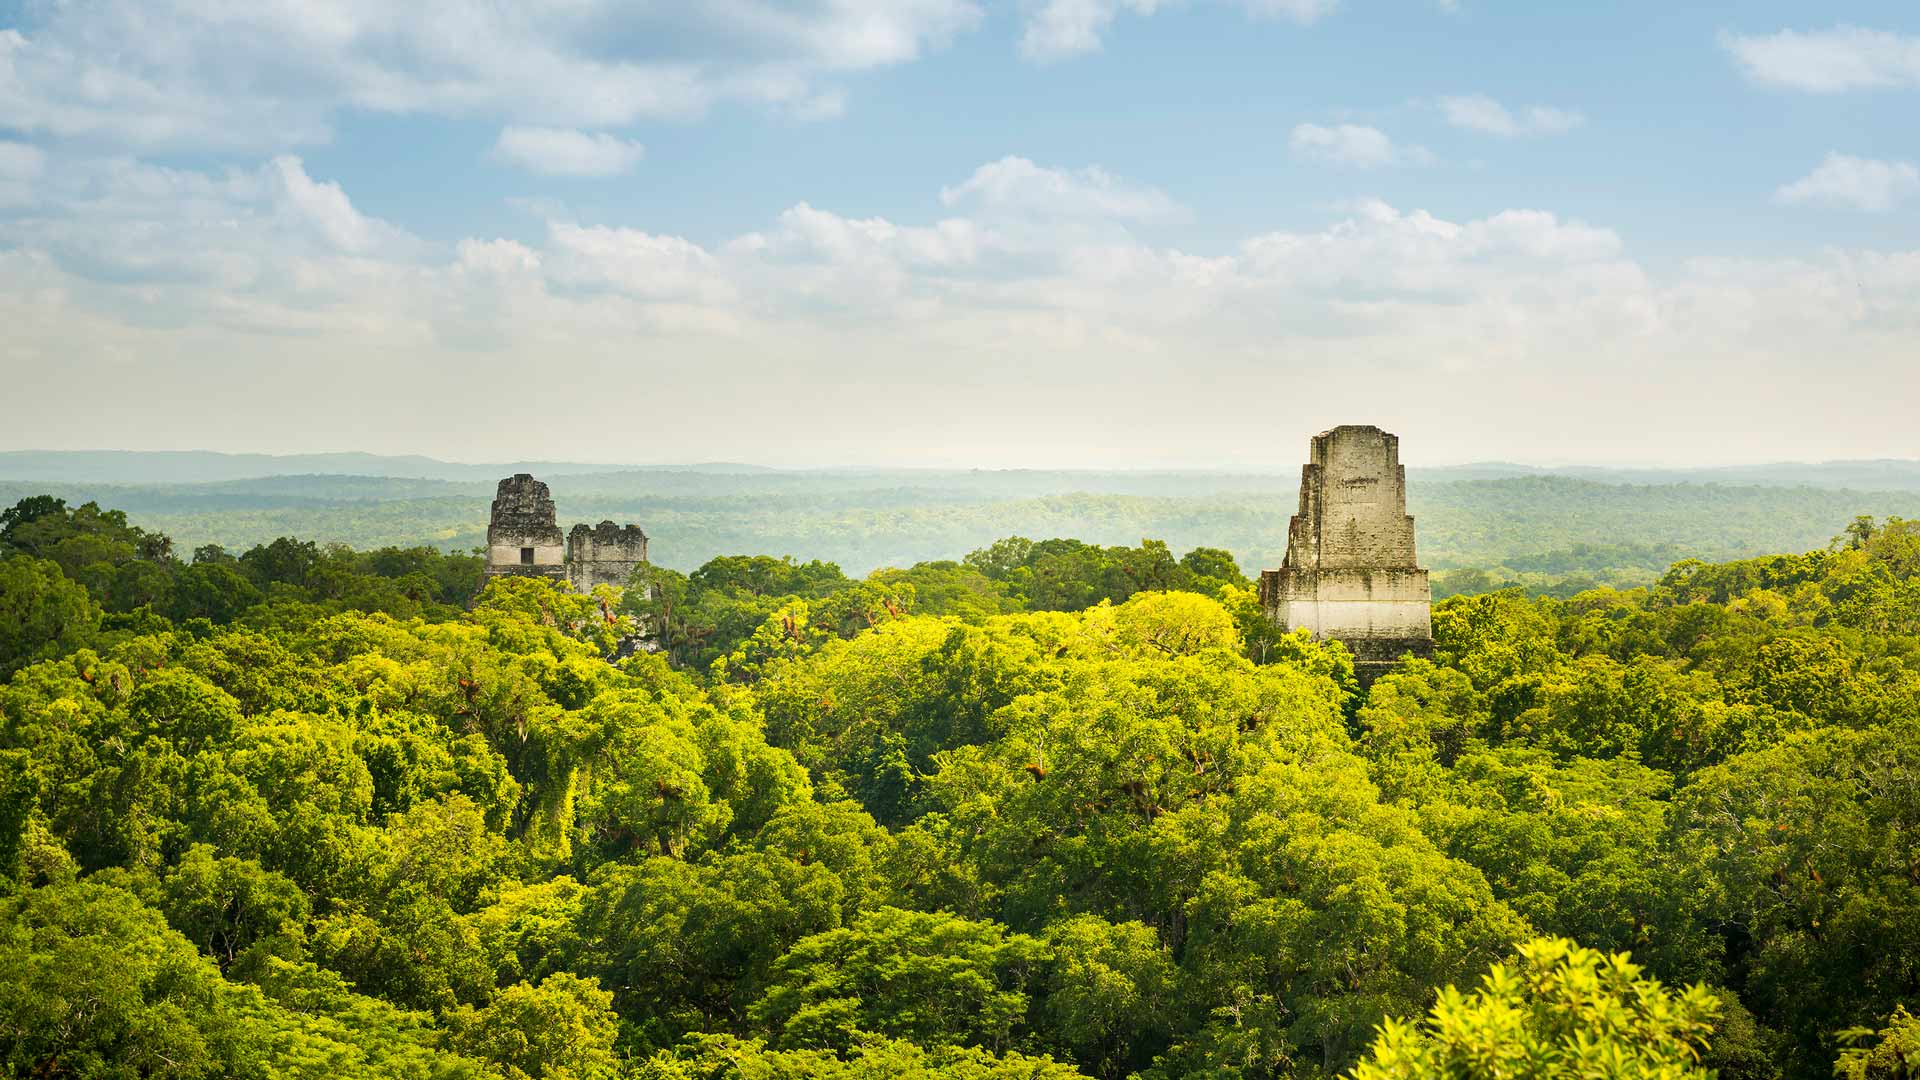 Mayan ruins in Tikal